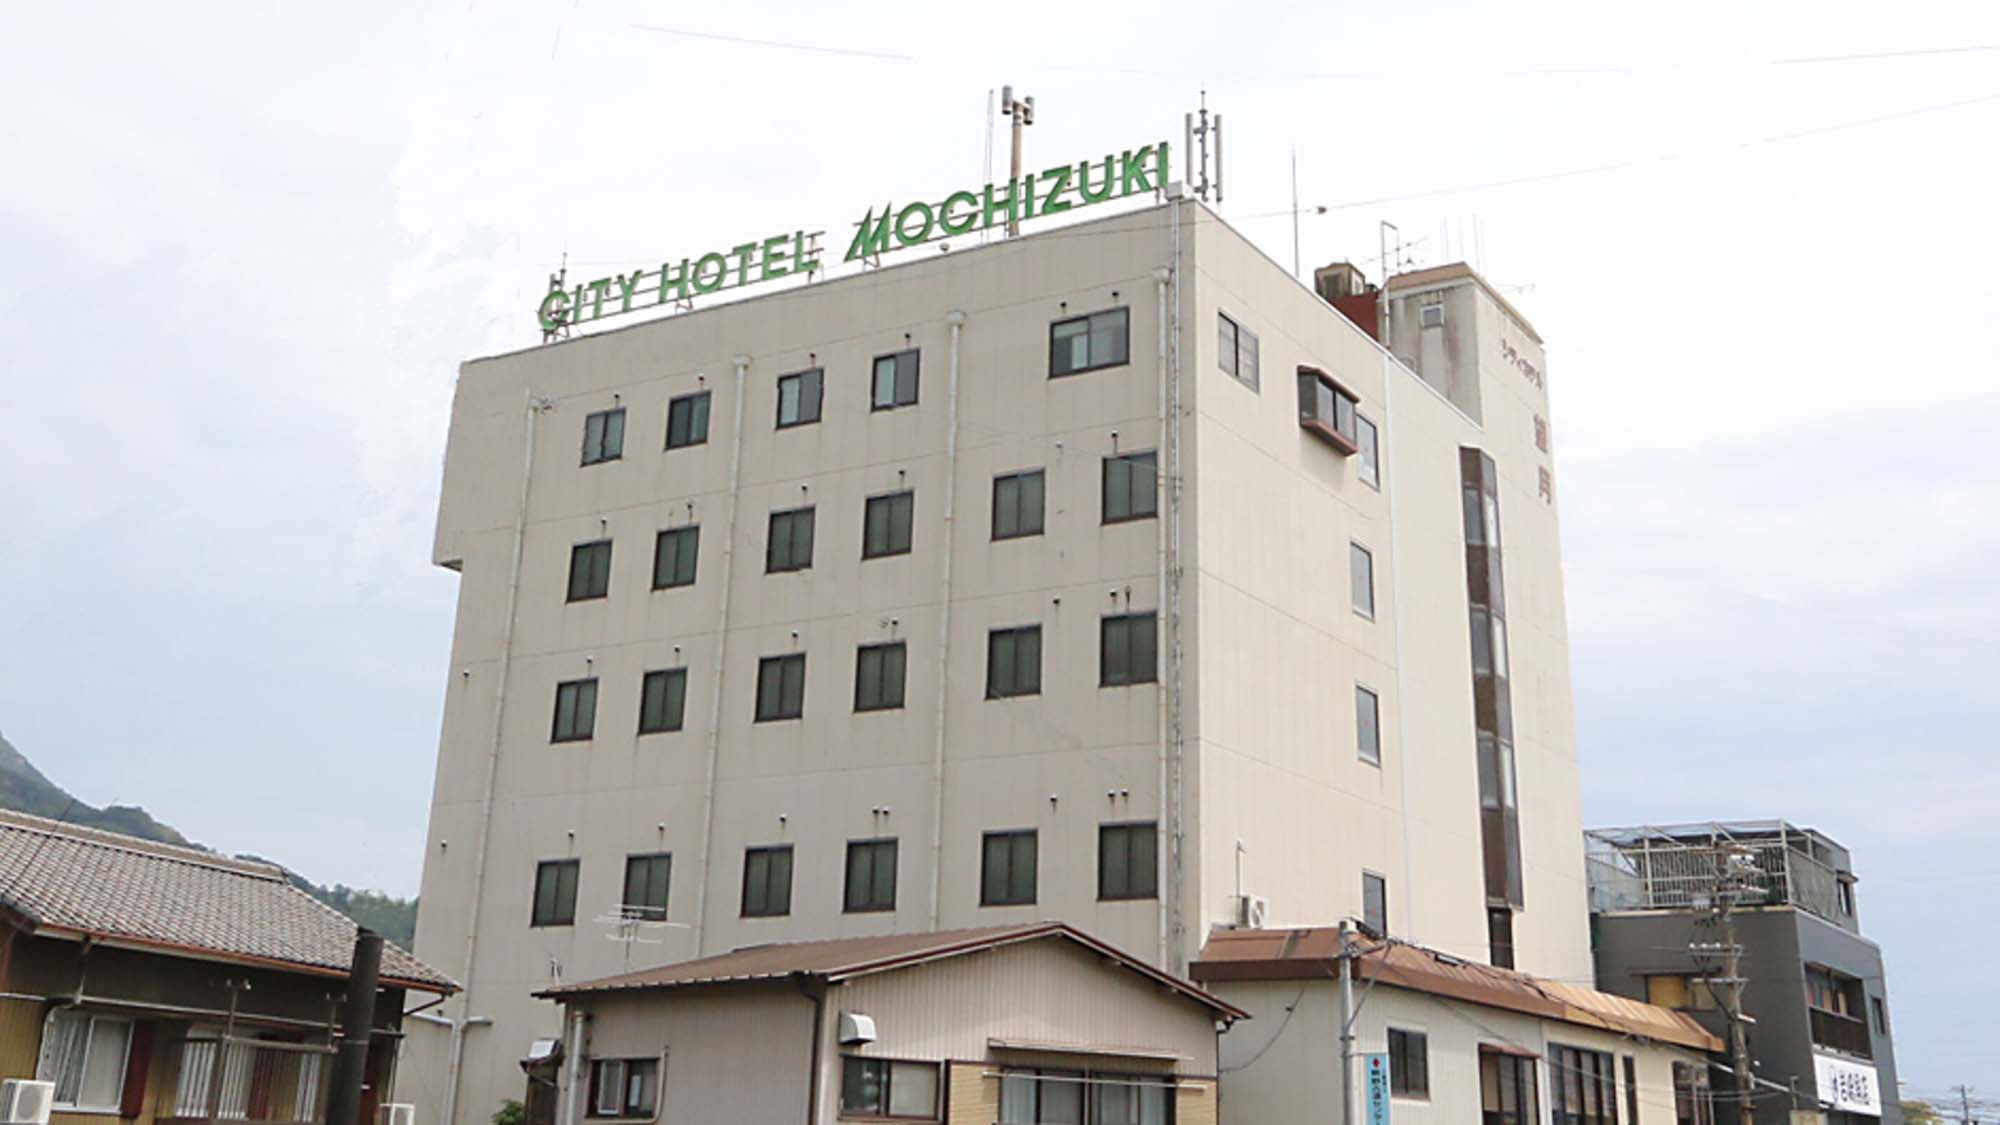 City Hotel Mochizuki